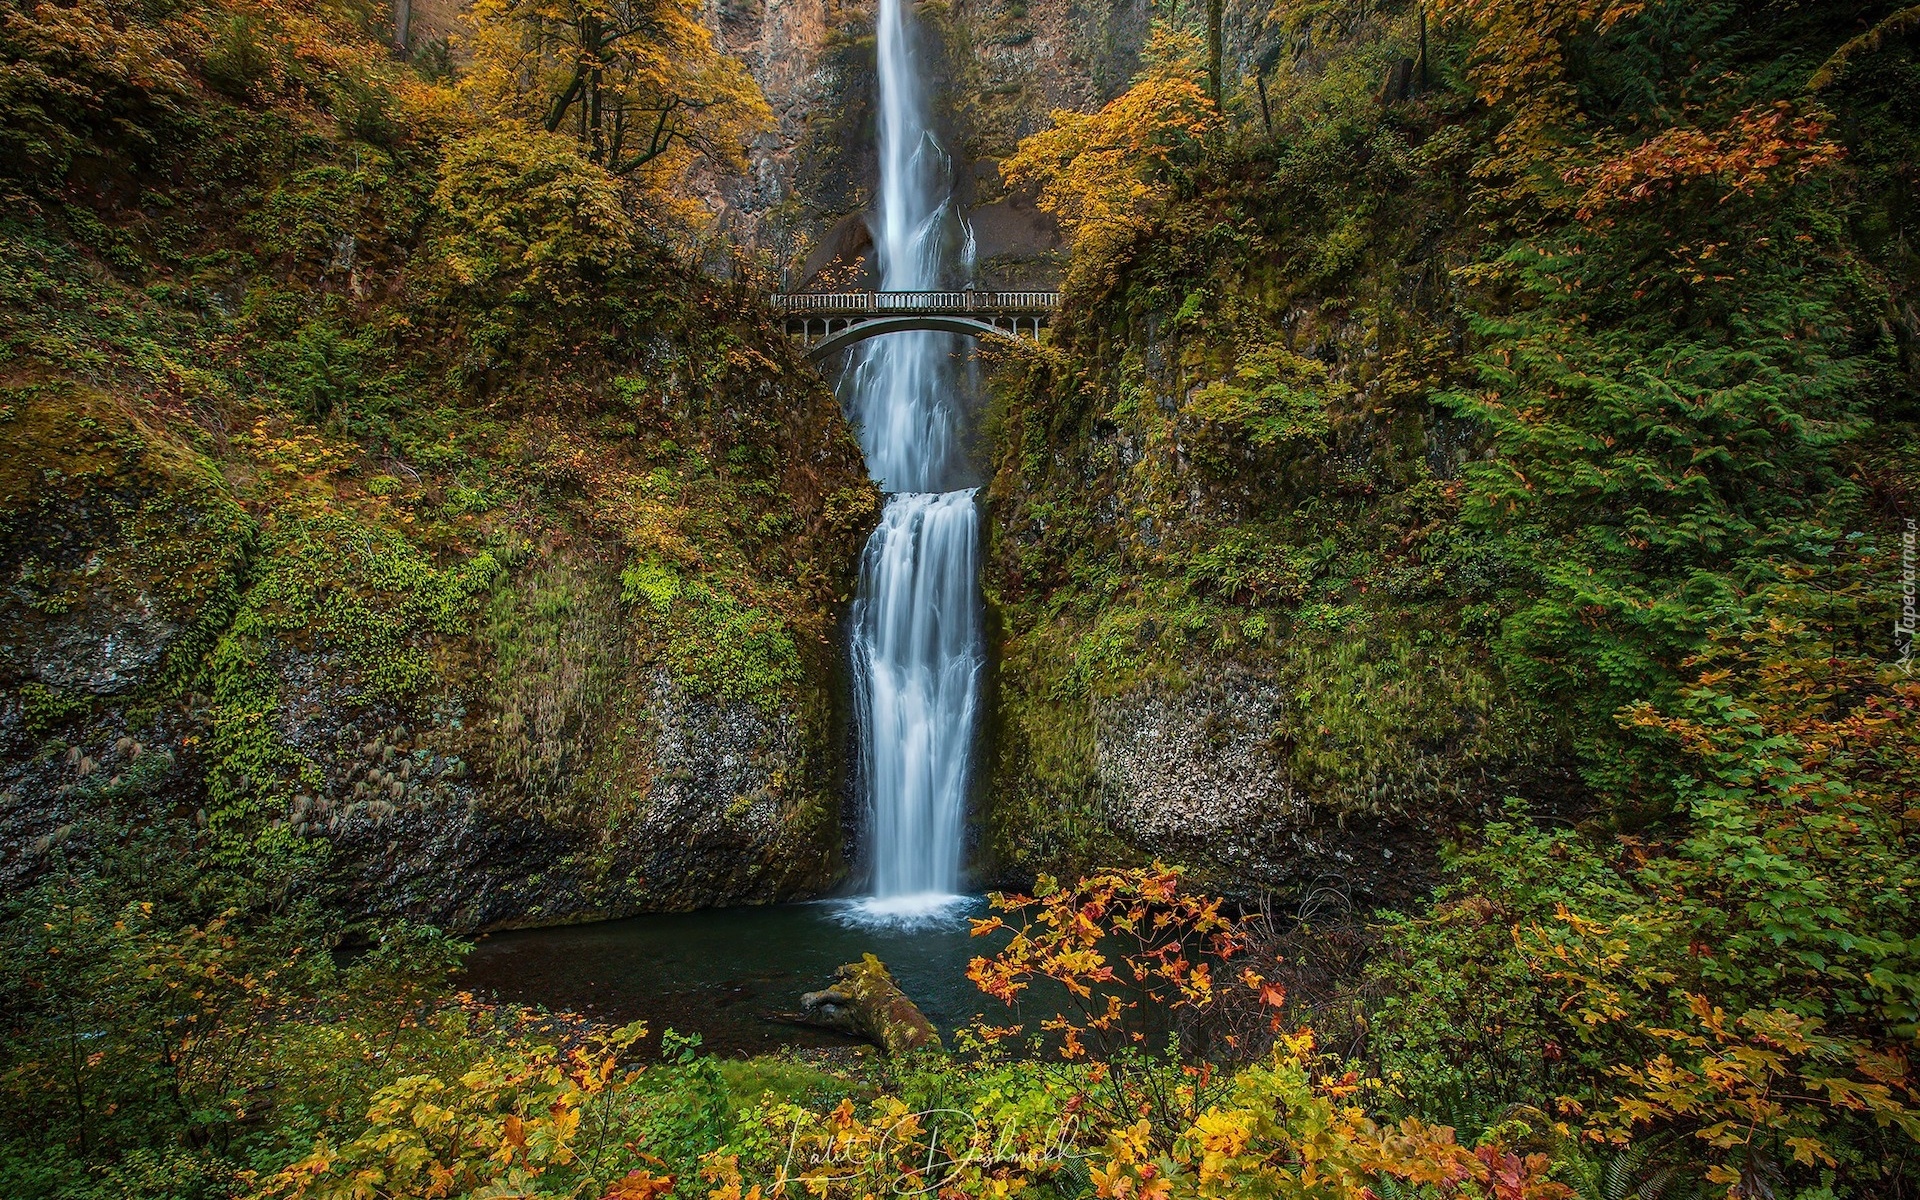 Wodospad, Multnomah Falls, Most, Skały, Drzewa, Hrabstwo Multnomah, Oregon, Stany Zjednoczone